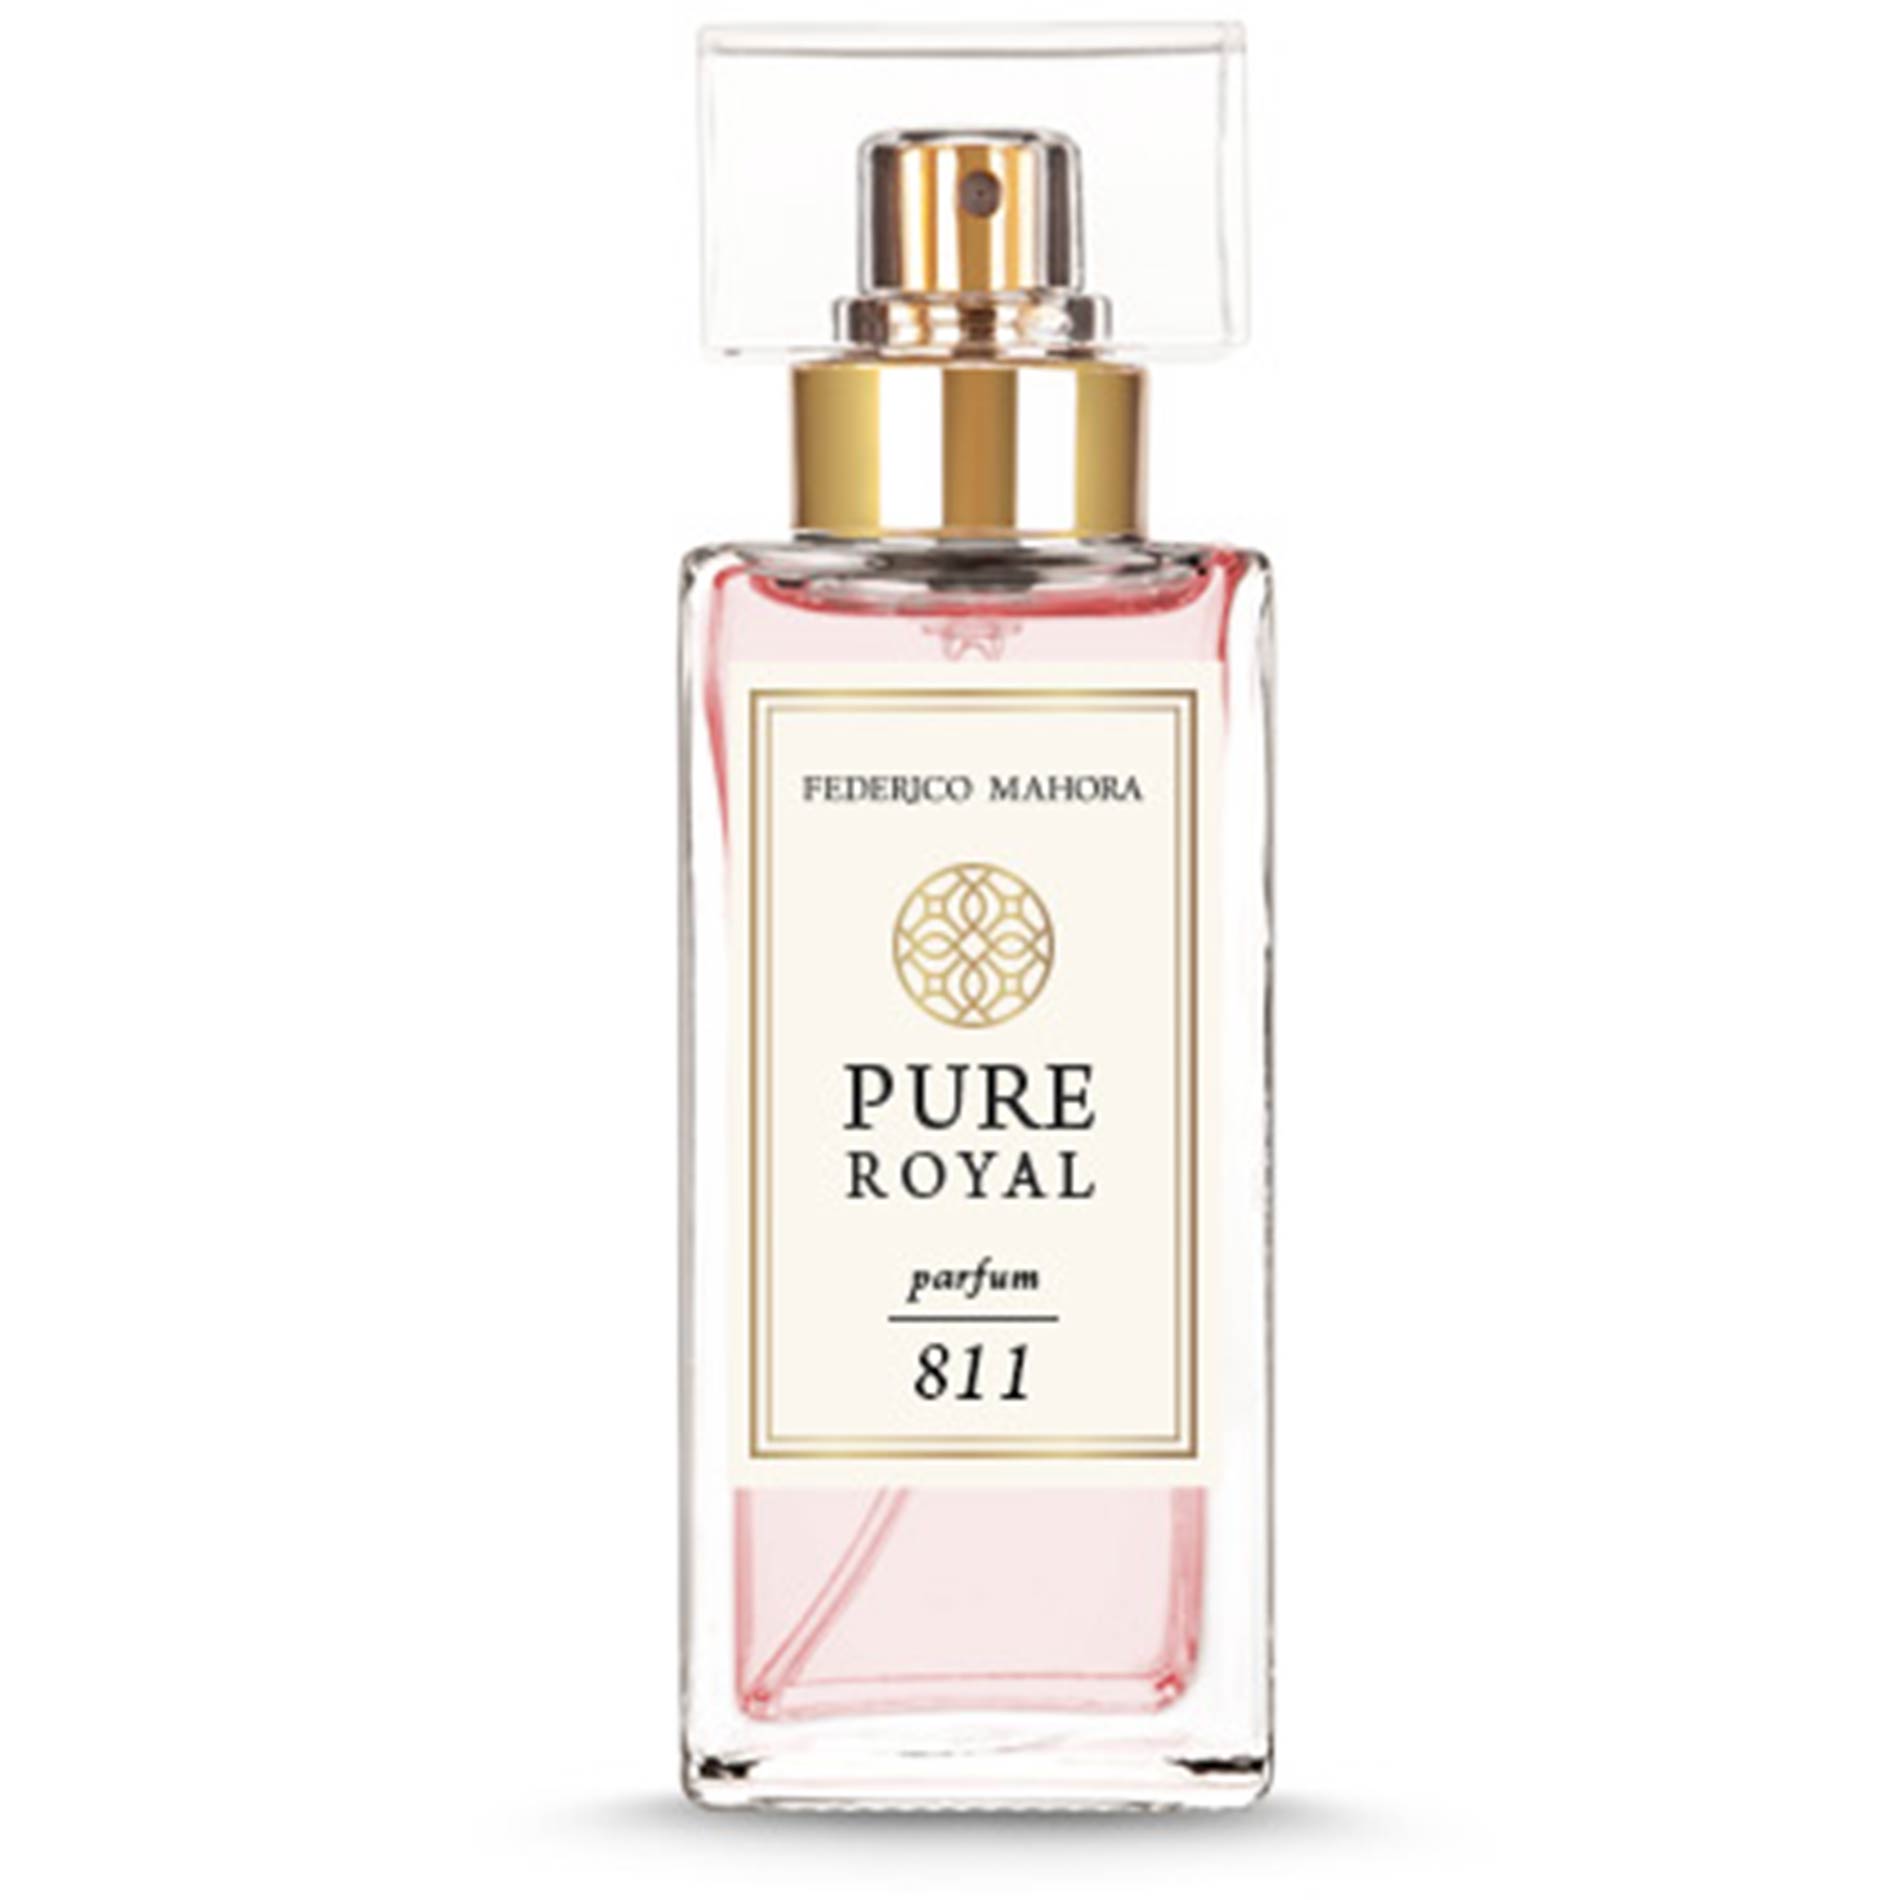 PURE ROYAL 811 Parfum by Federico Mahora